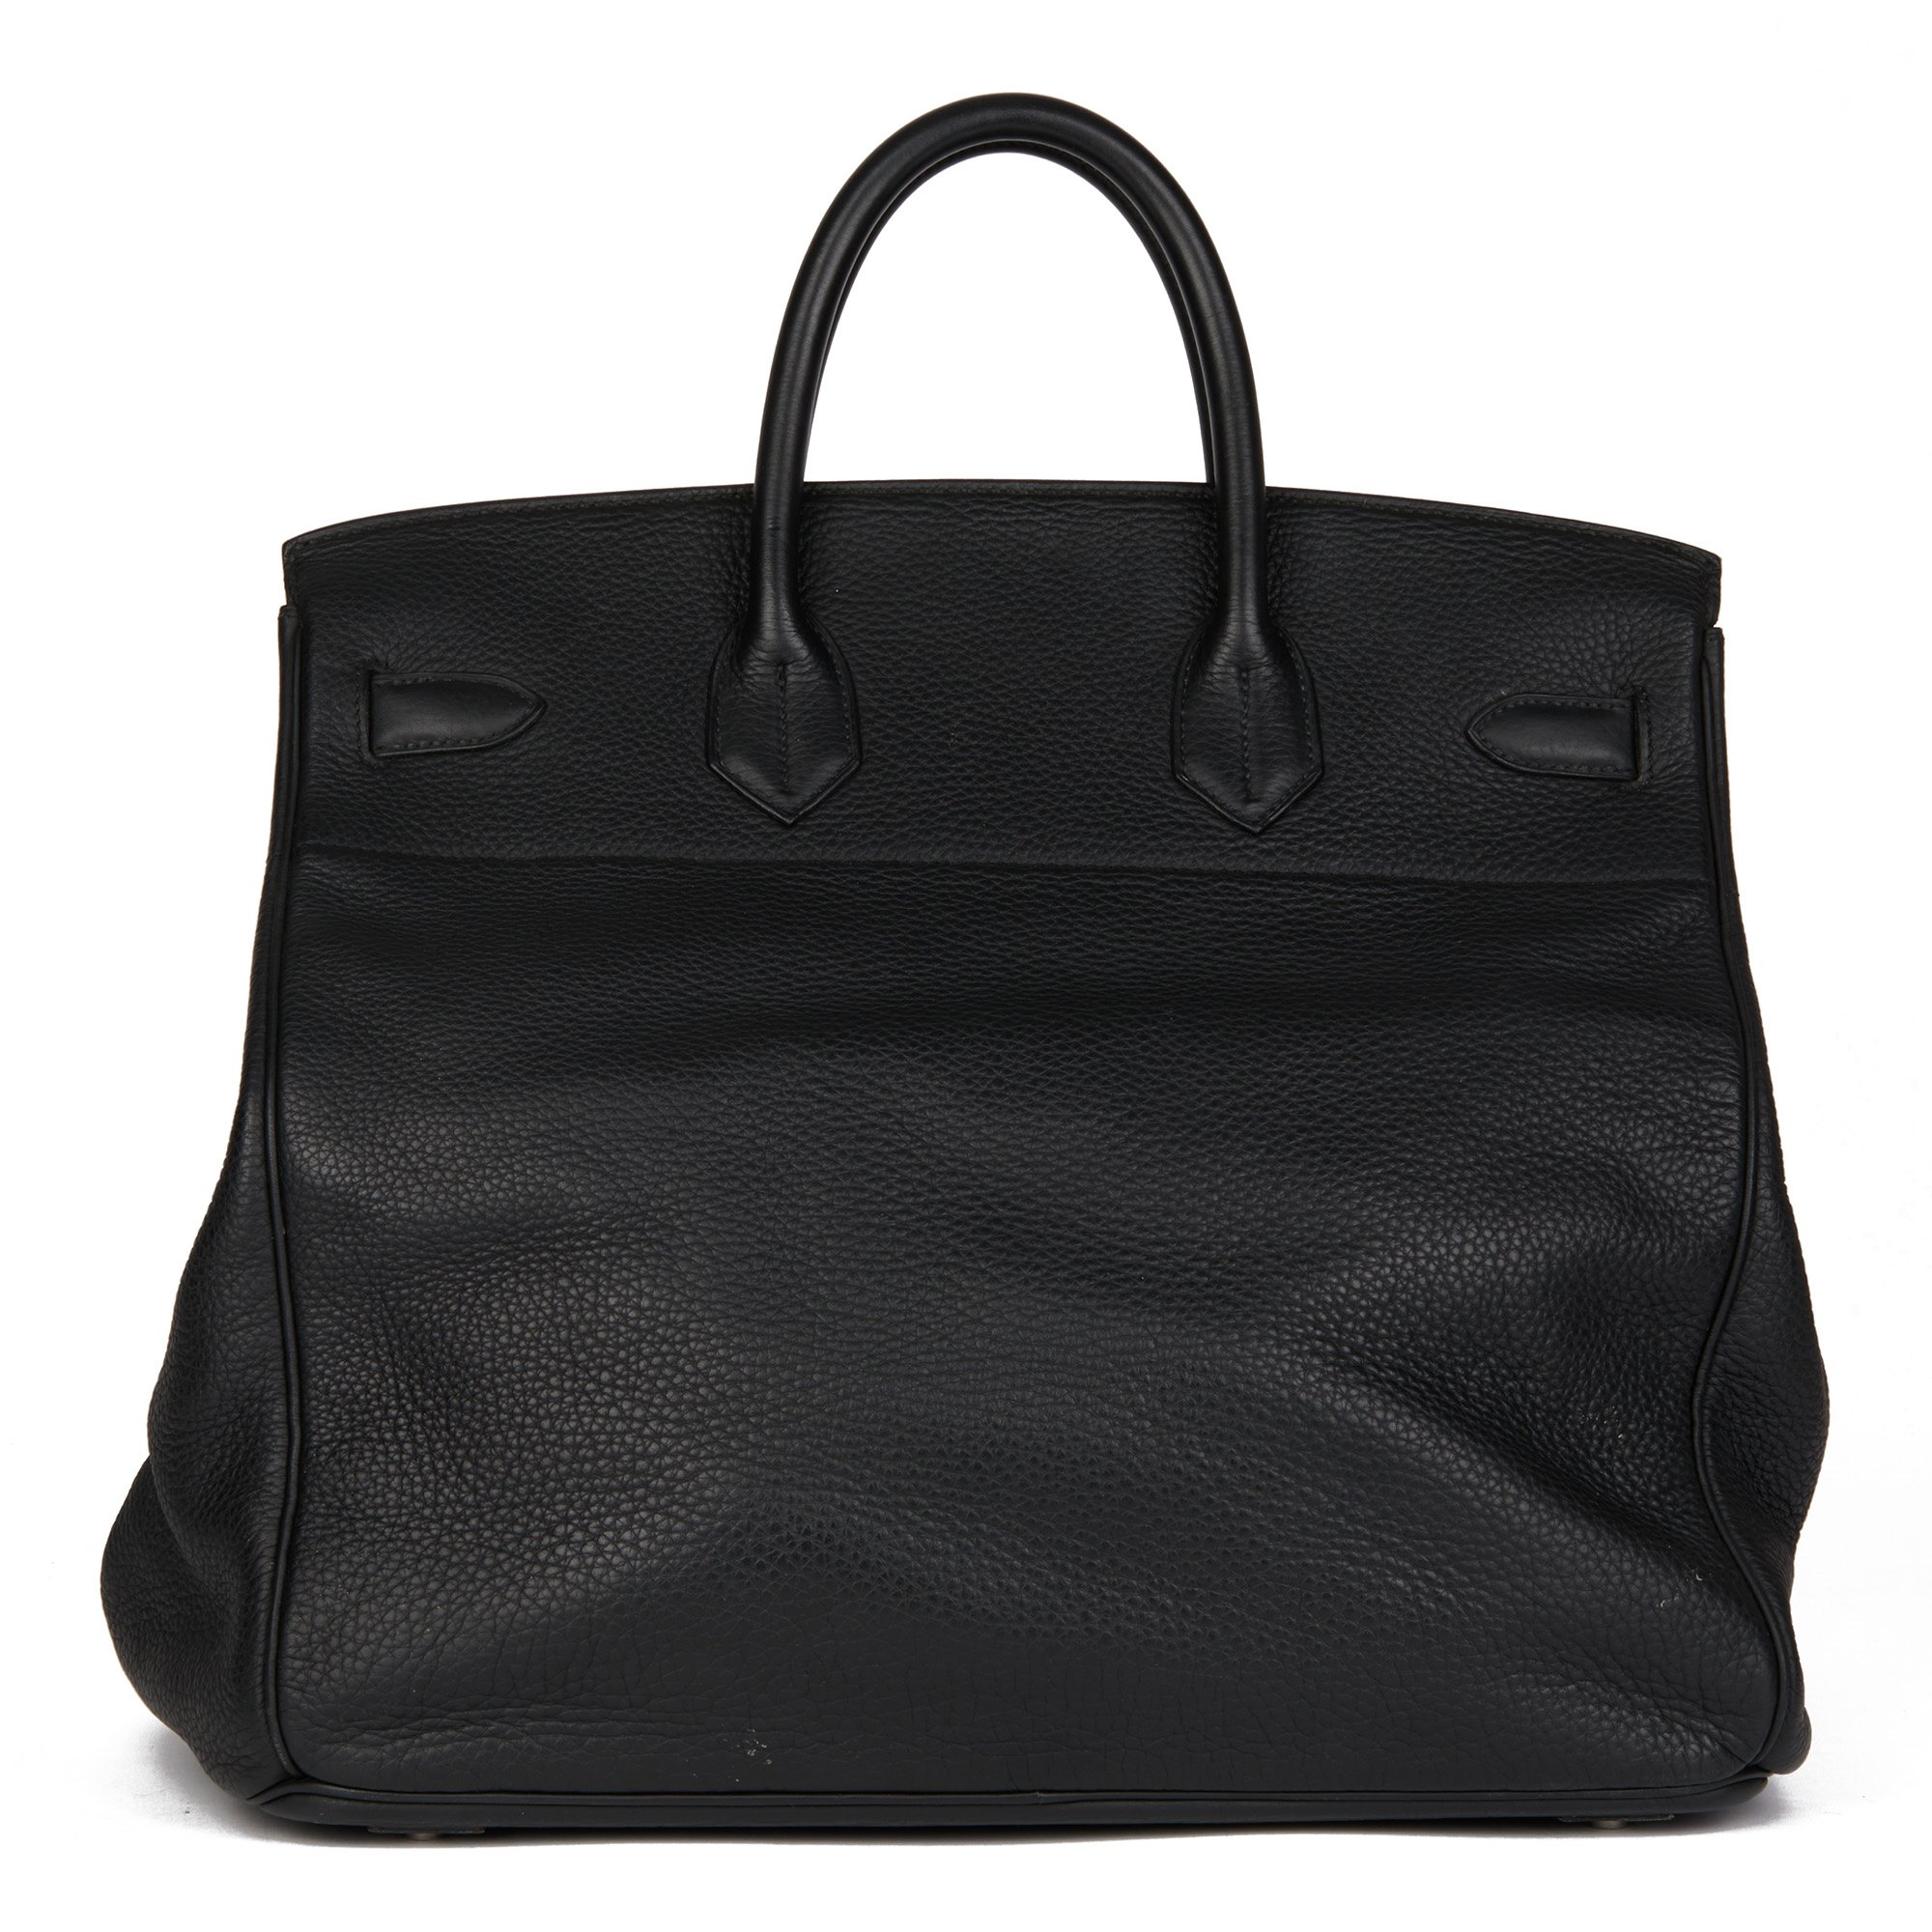 Hermès Black Togo Leather Birkin 40cm HAC